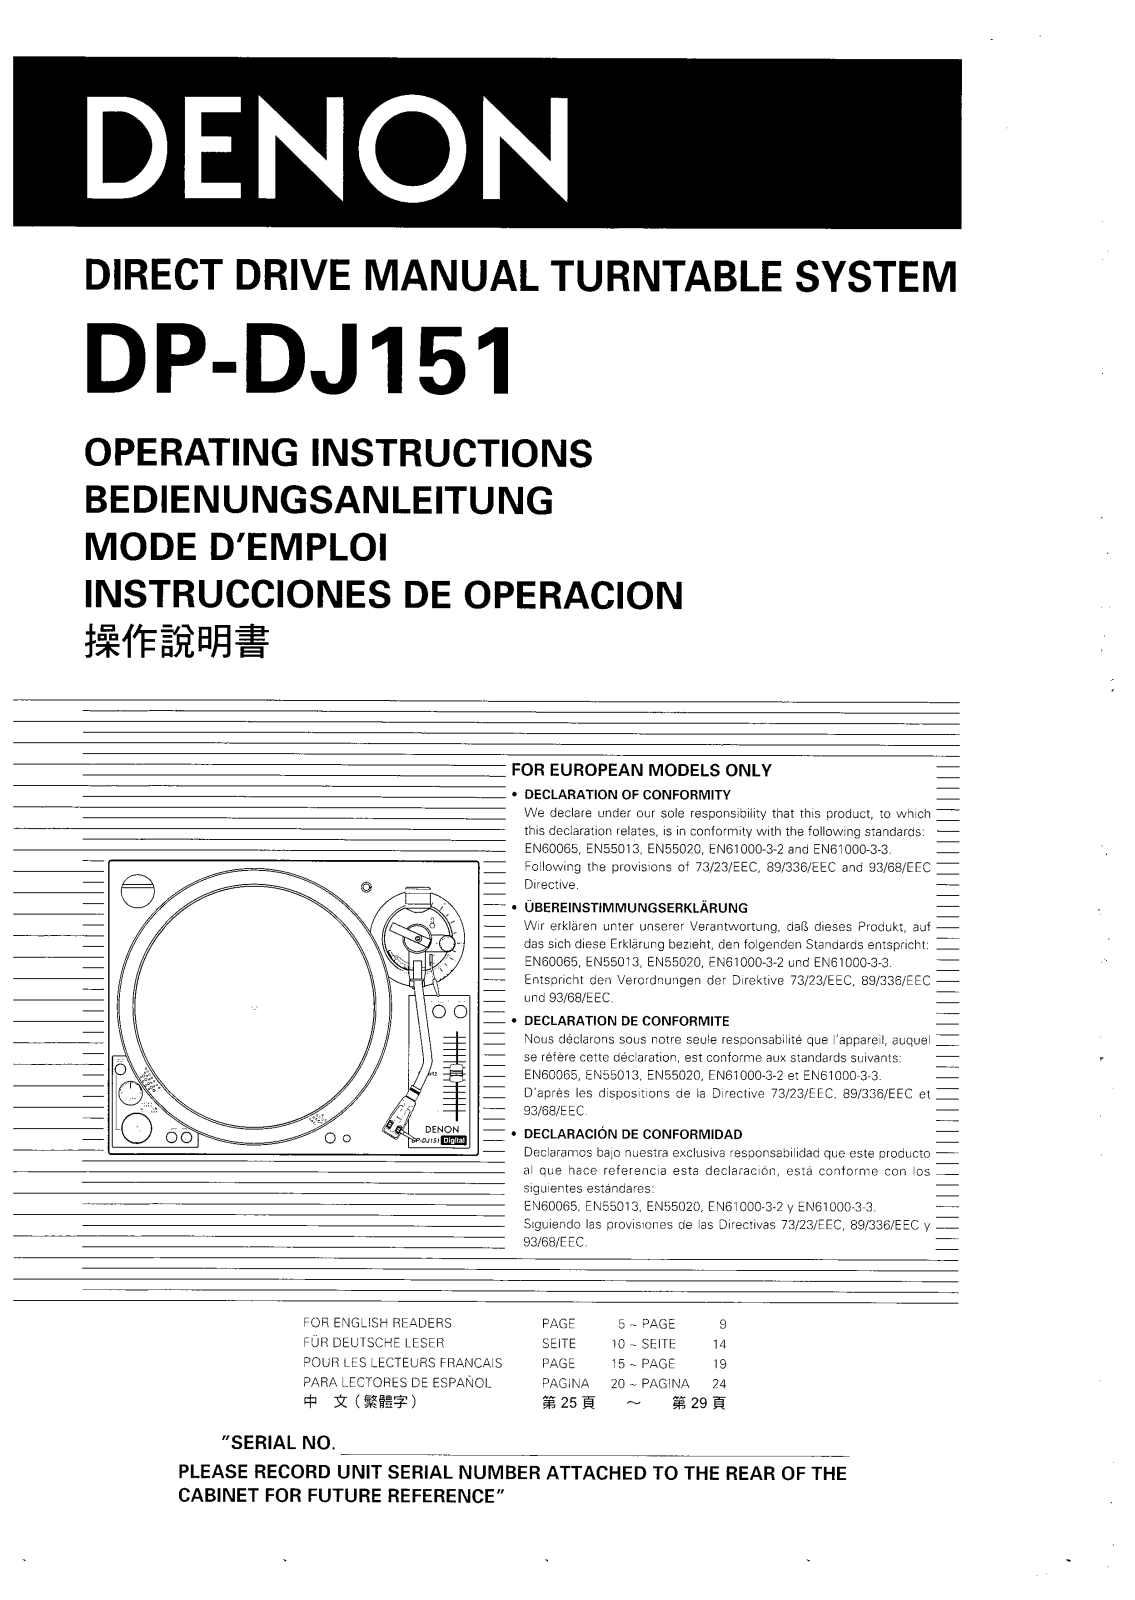 DENON DP-DJ151 User Manual